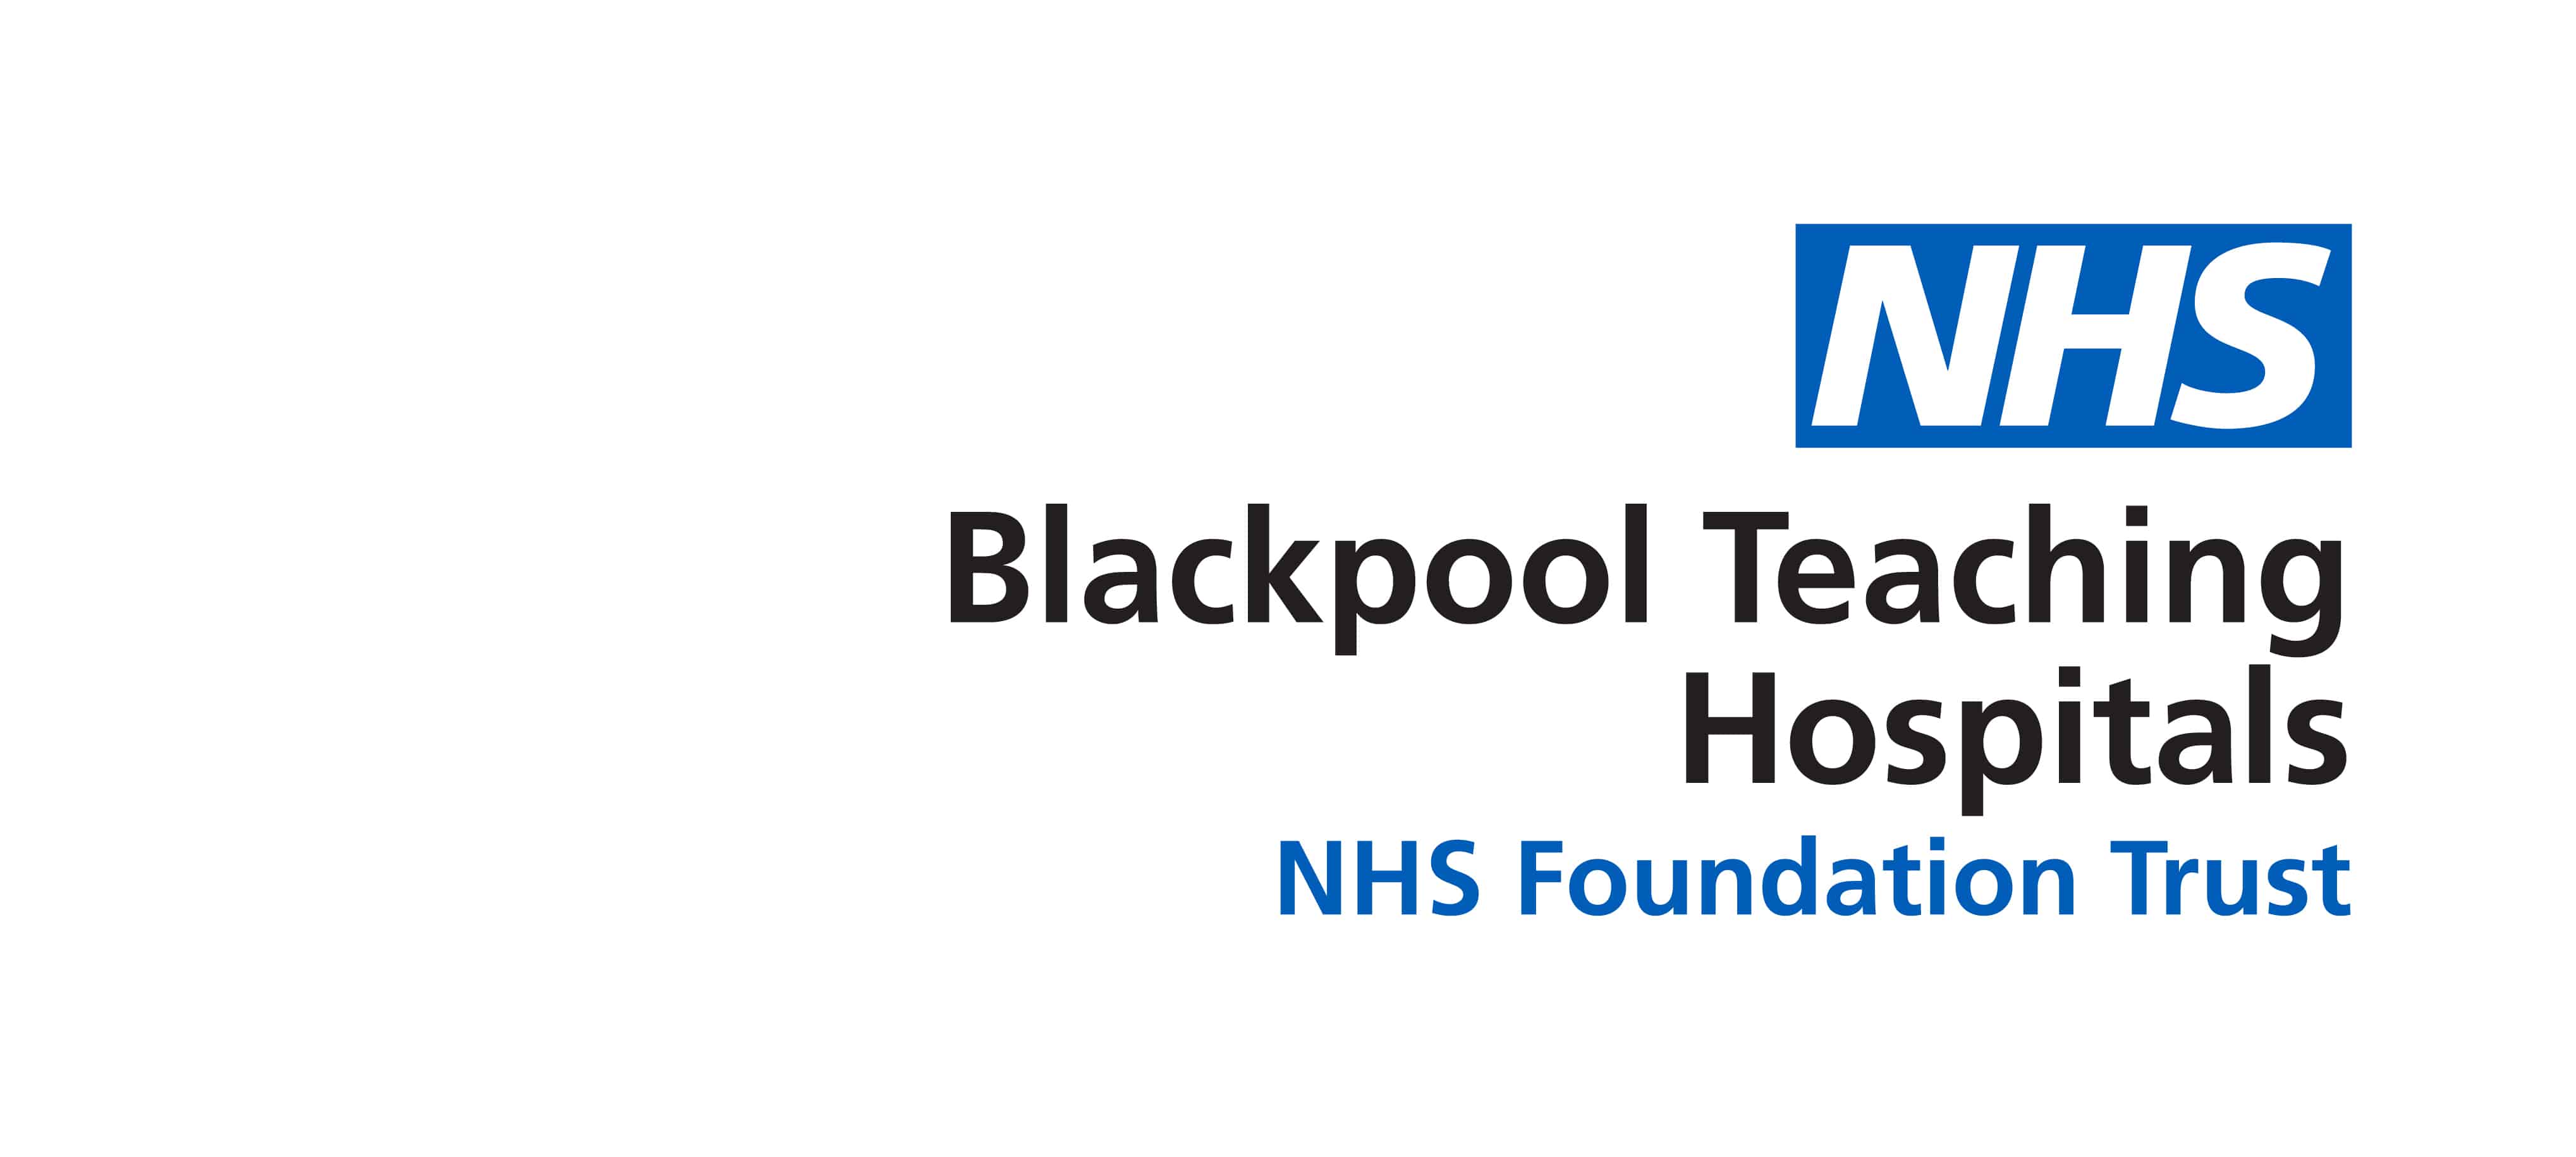 NEW Blackpool Teaching Hospitals NHS Foundation Trust RGB BLUE new logo ...